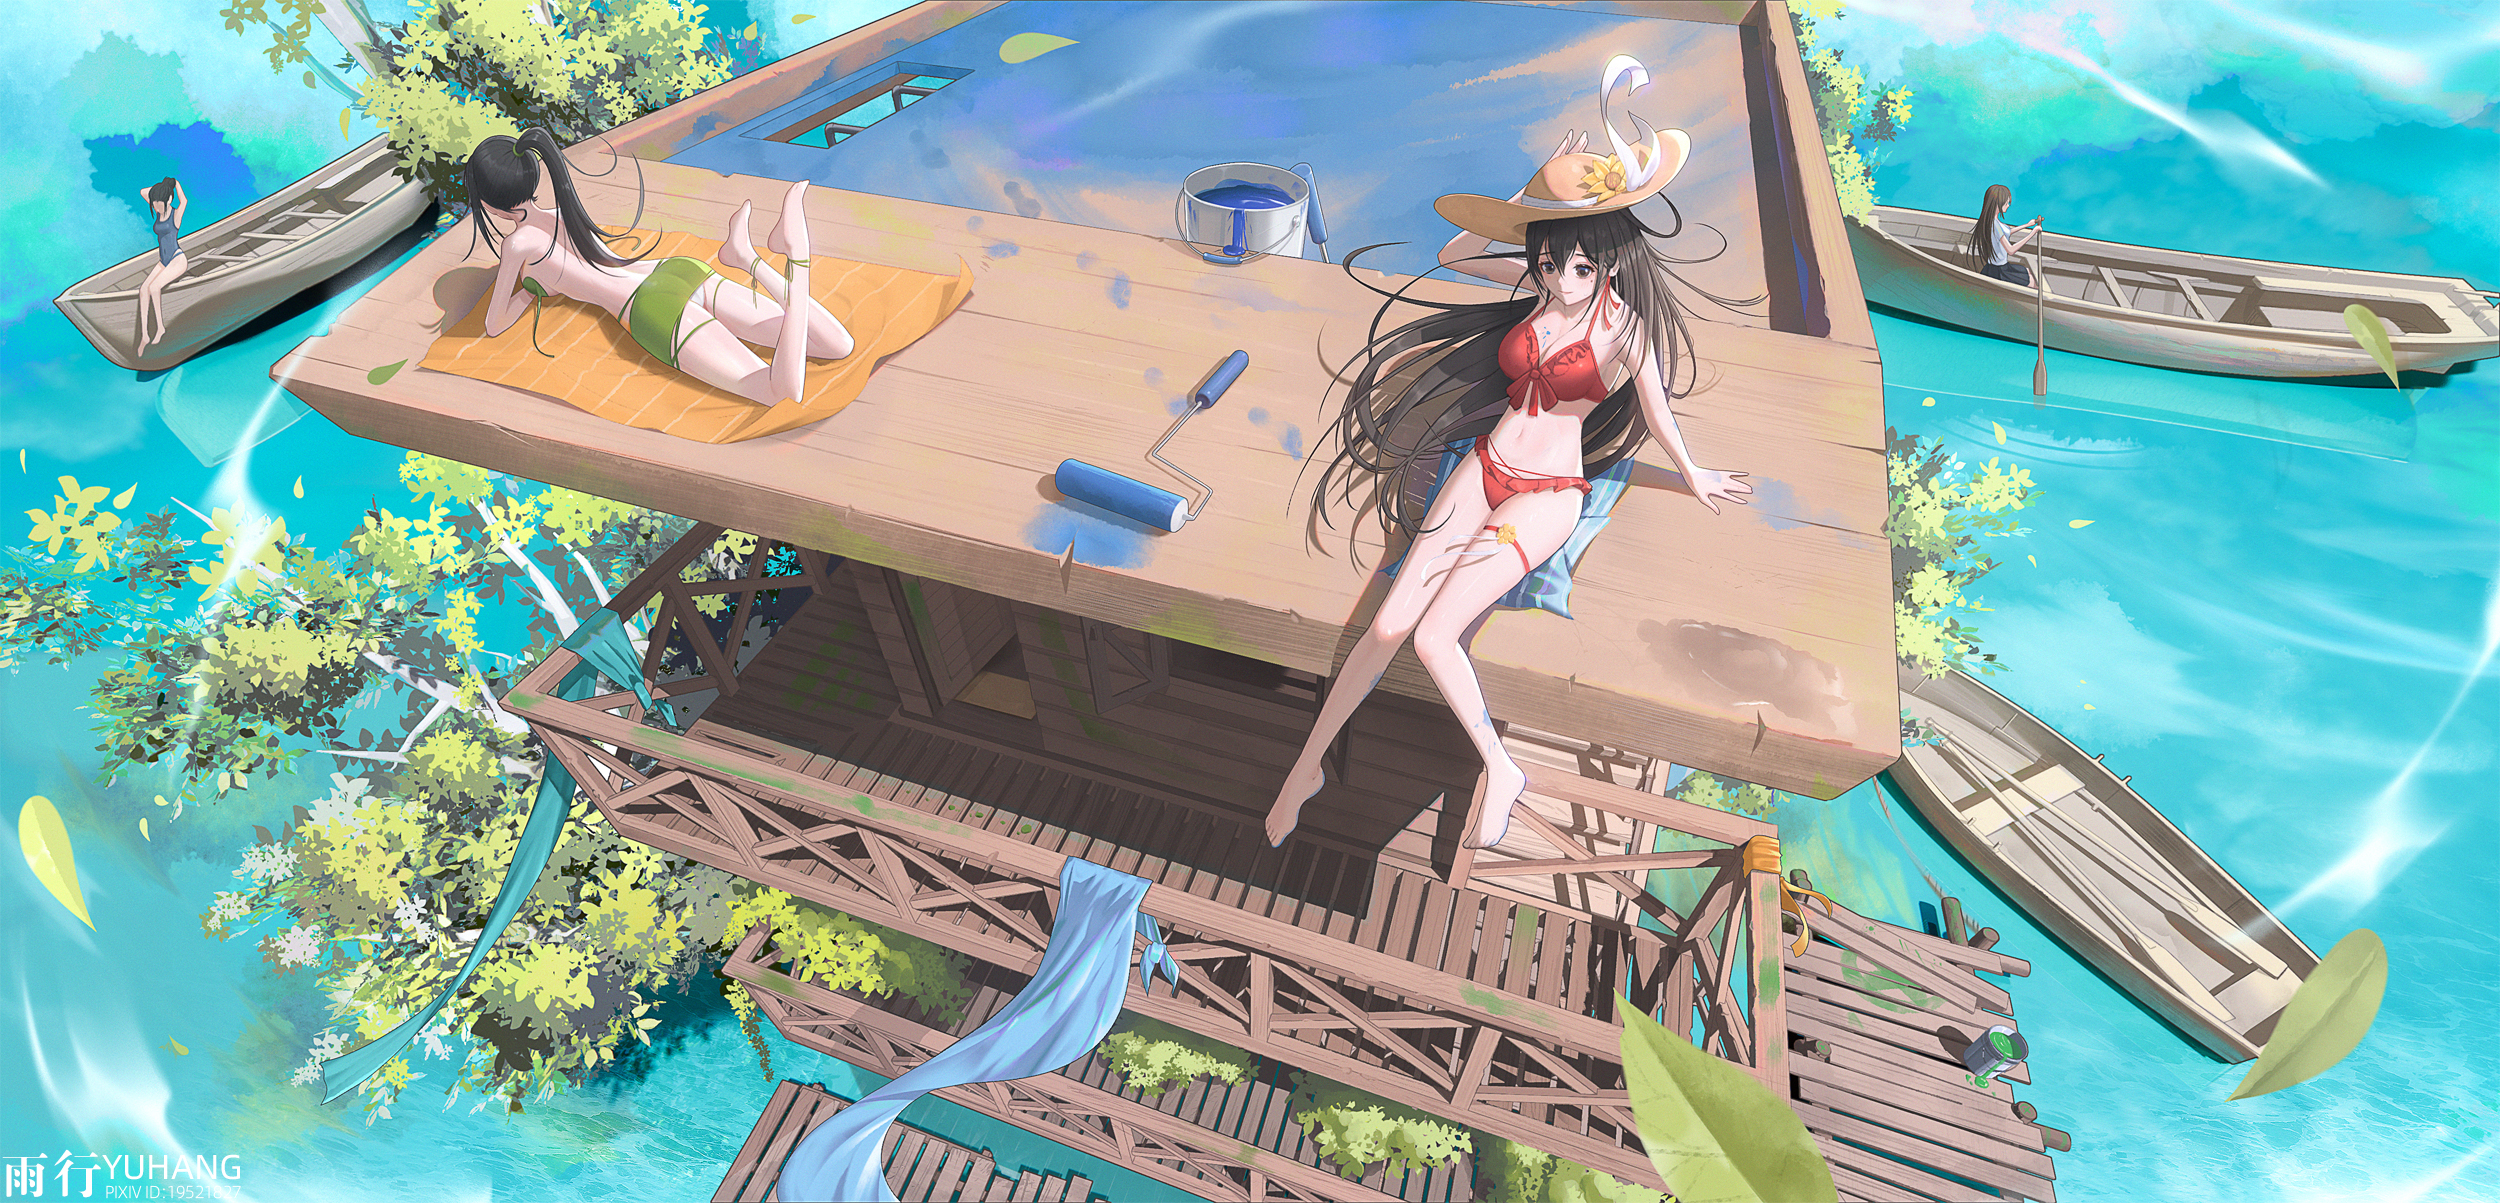 Anime 2500x1203 anime anime girls leaves water boat long hair swimwear bikini hat feet lying down lying on front watermarked sitting paint can paint roller